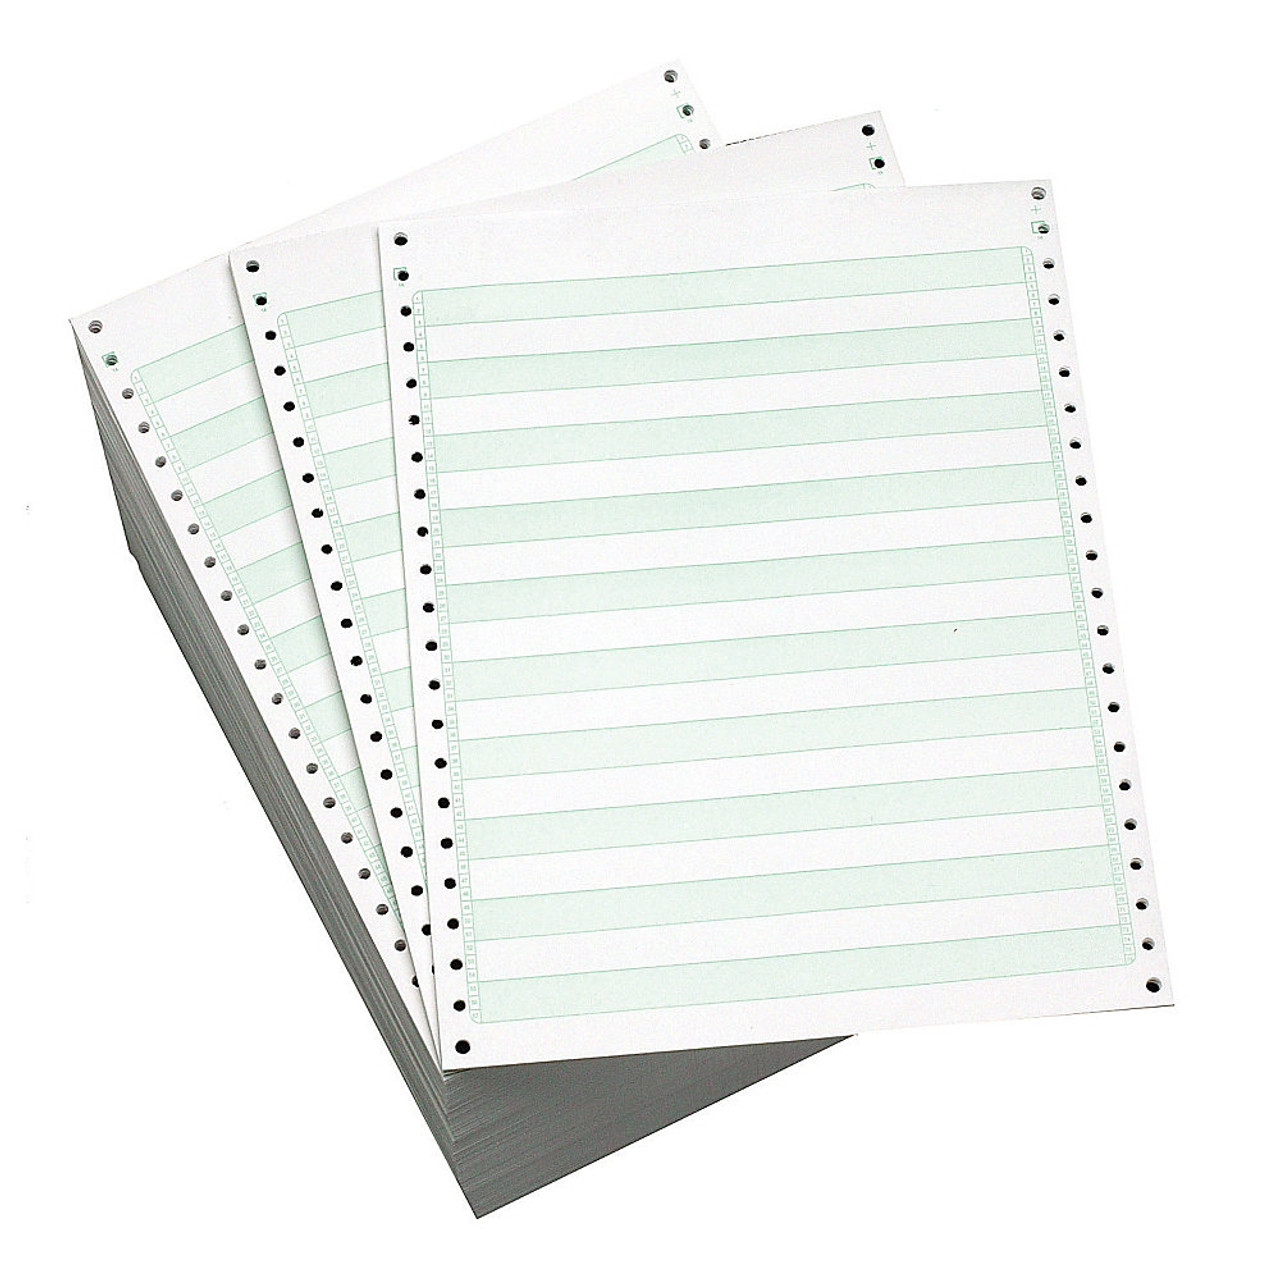 3,500 Sheets 8.5 x 11 Continuous Stock Computer Paper 1 Part